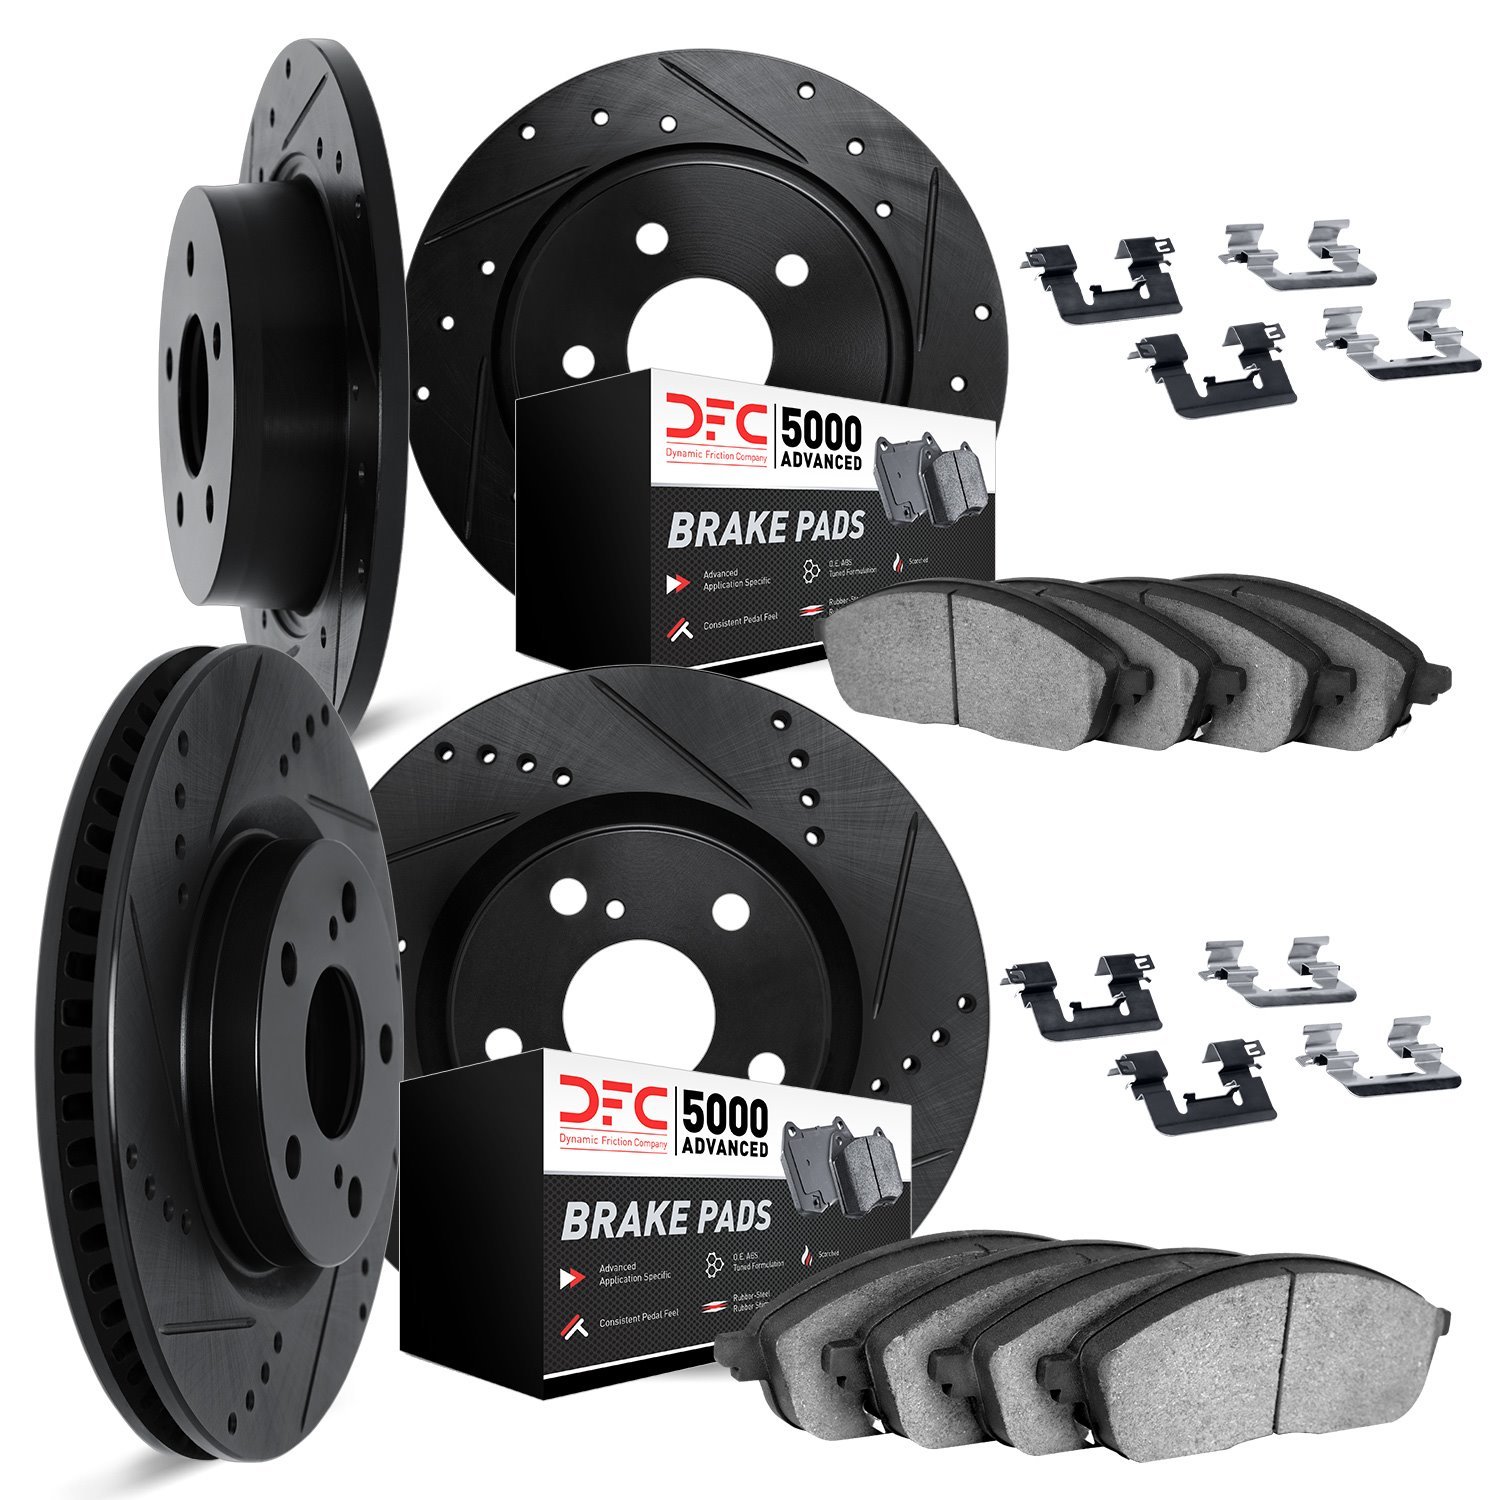 8514-54382 Drilled/Slotted Brake Rotors w/5000 Advanced Brake Pads Kit & Hardware [Black], 2015-2020 Ford/Lincoln/Mercury/Mazda,